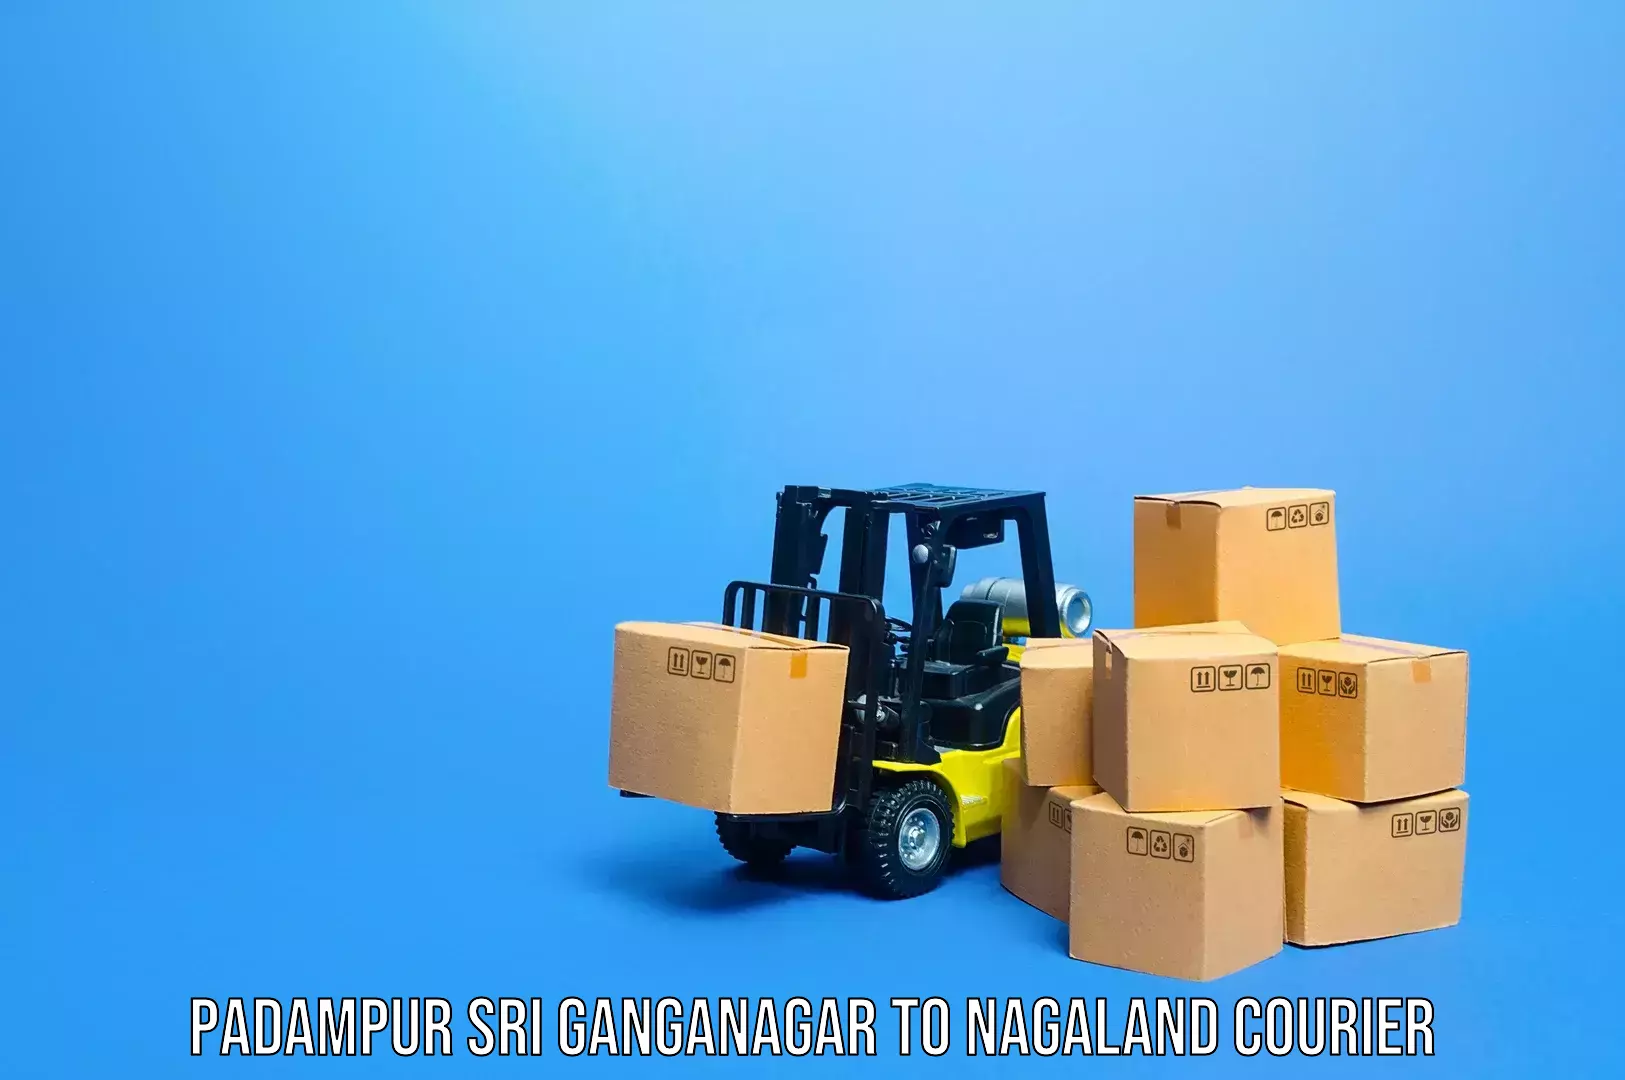 Luggage delivery app Padampur Sri Ganganagar to Kohima